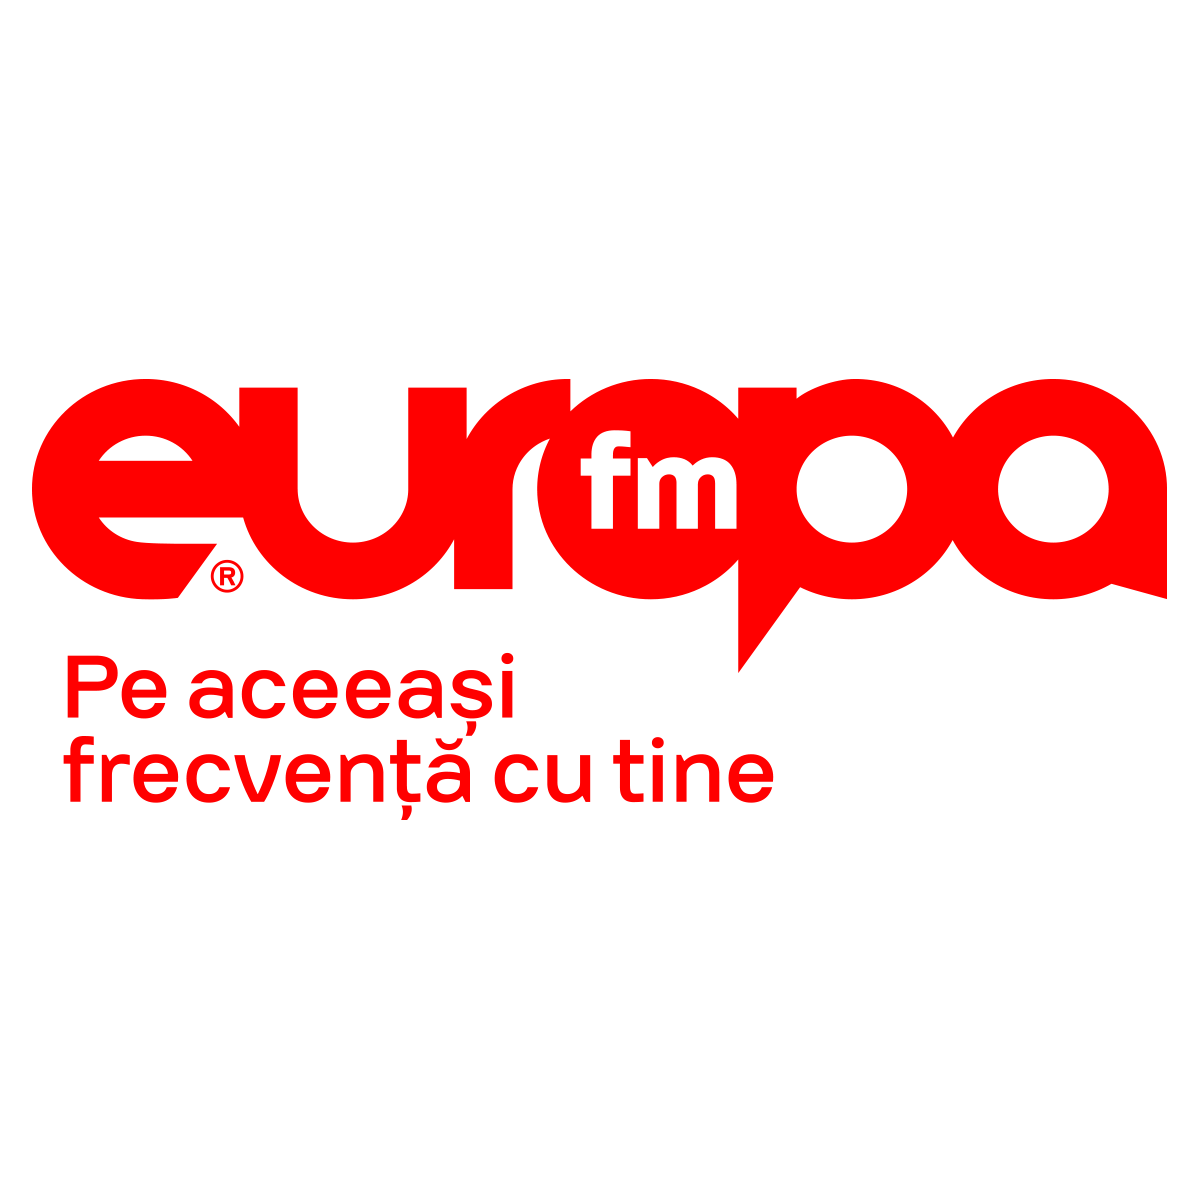 (c) Europafm.ro